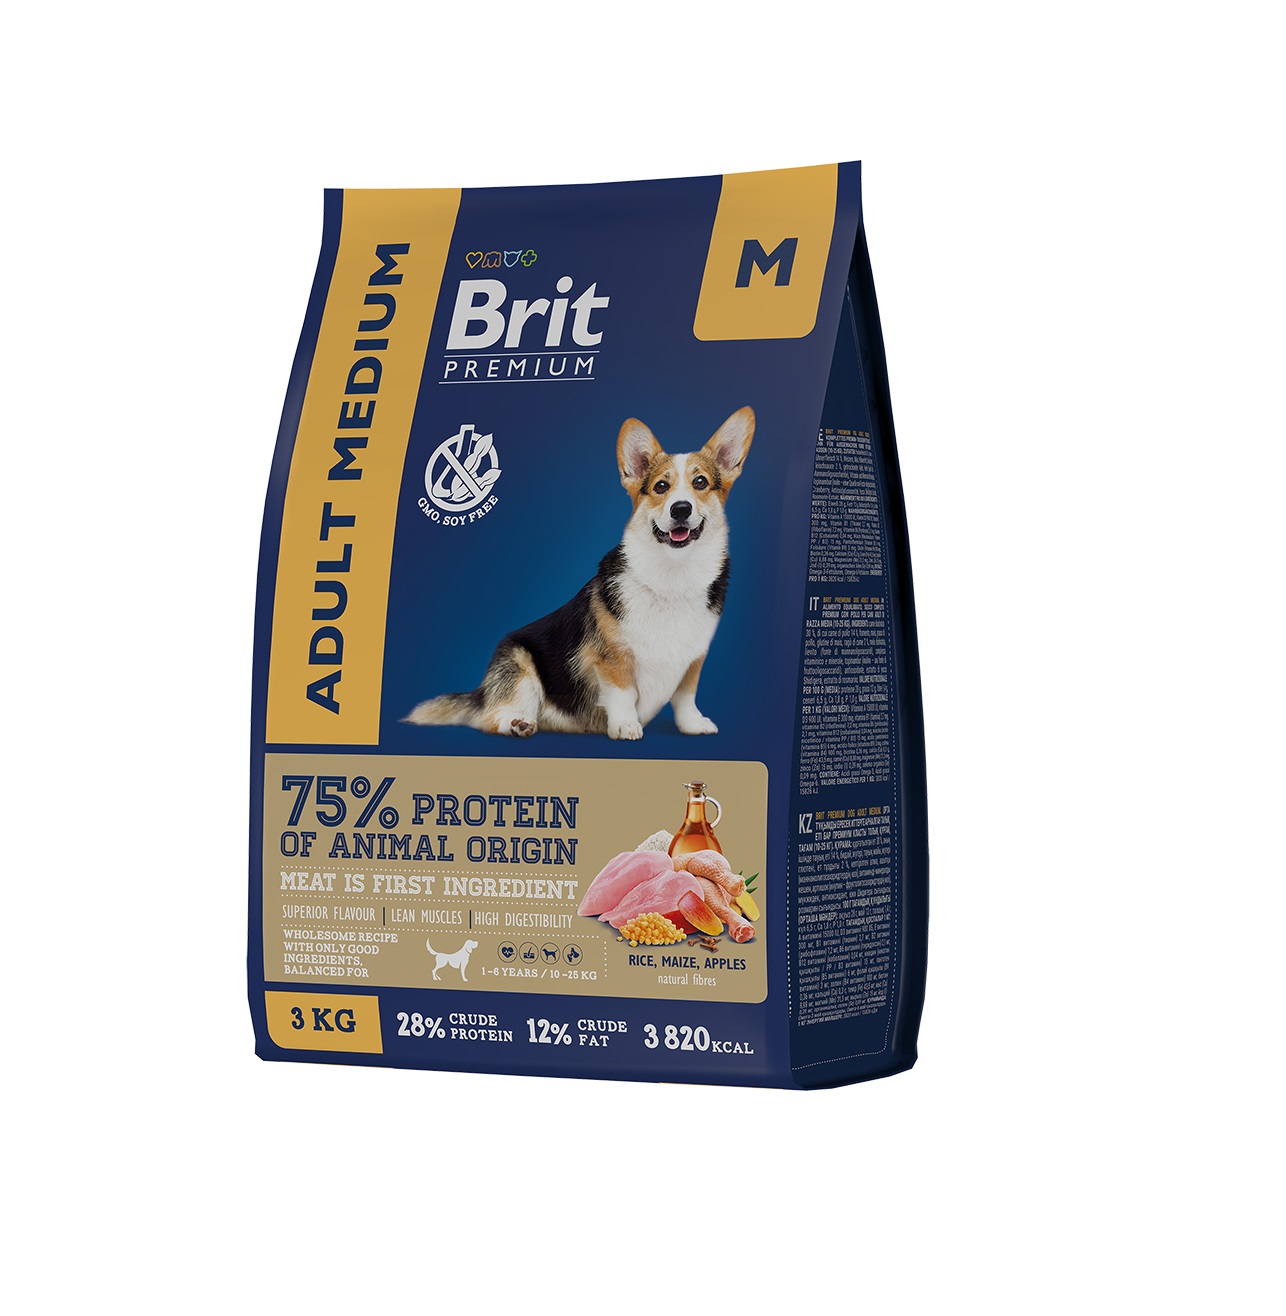 Брит 3кг для собак Средних пород Курица (Brit Premium by Nature)